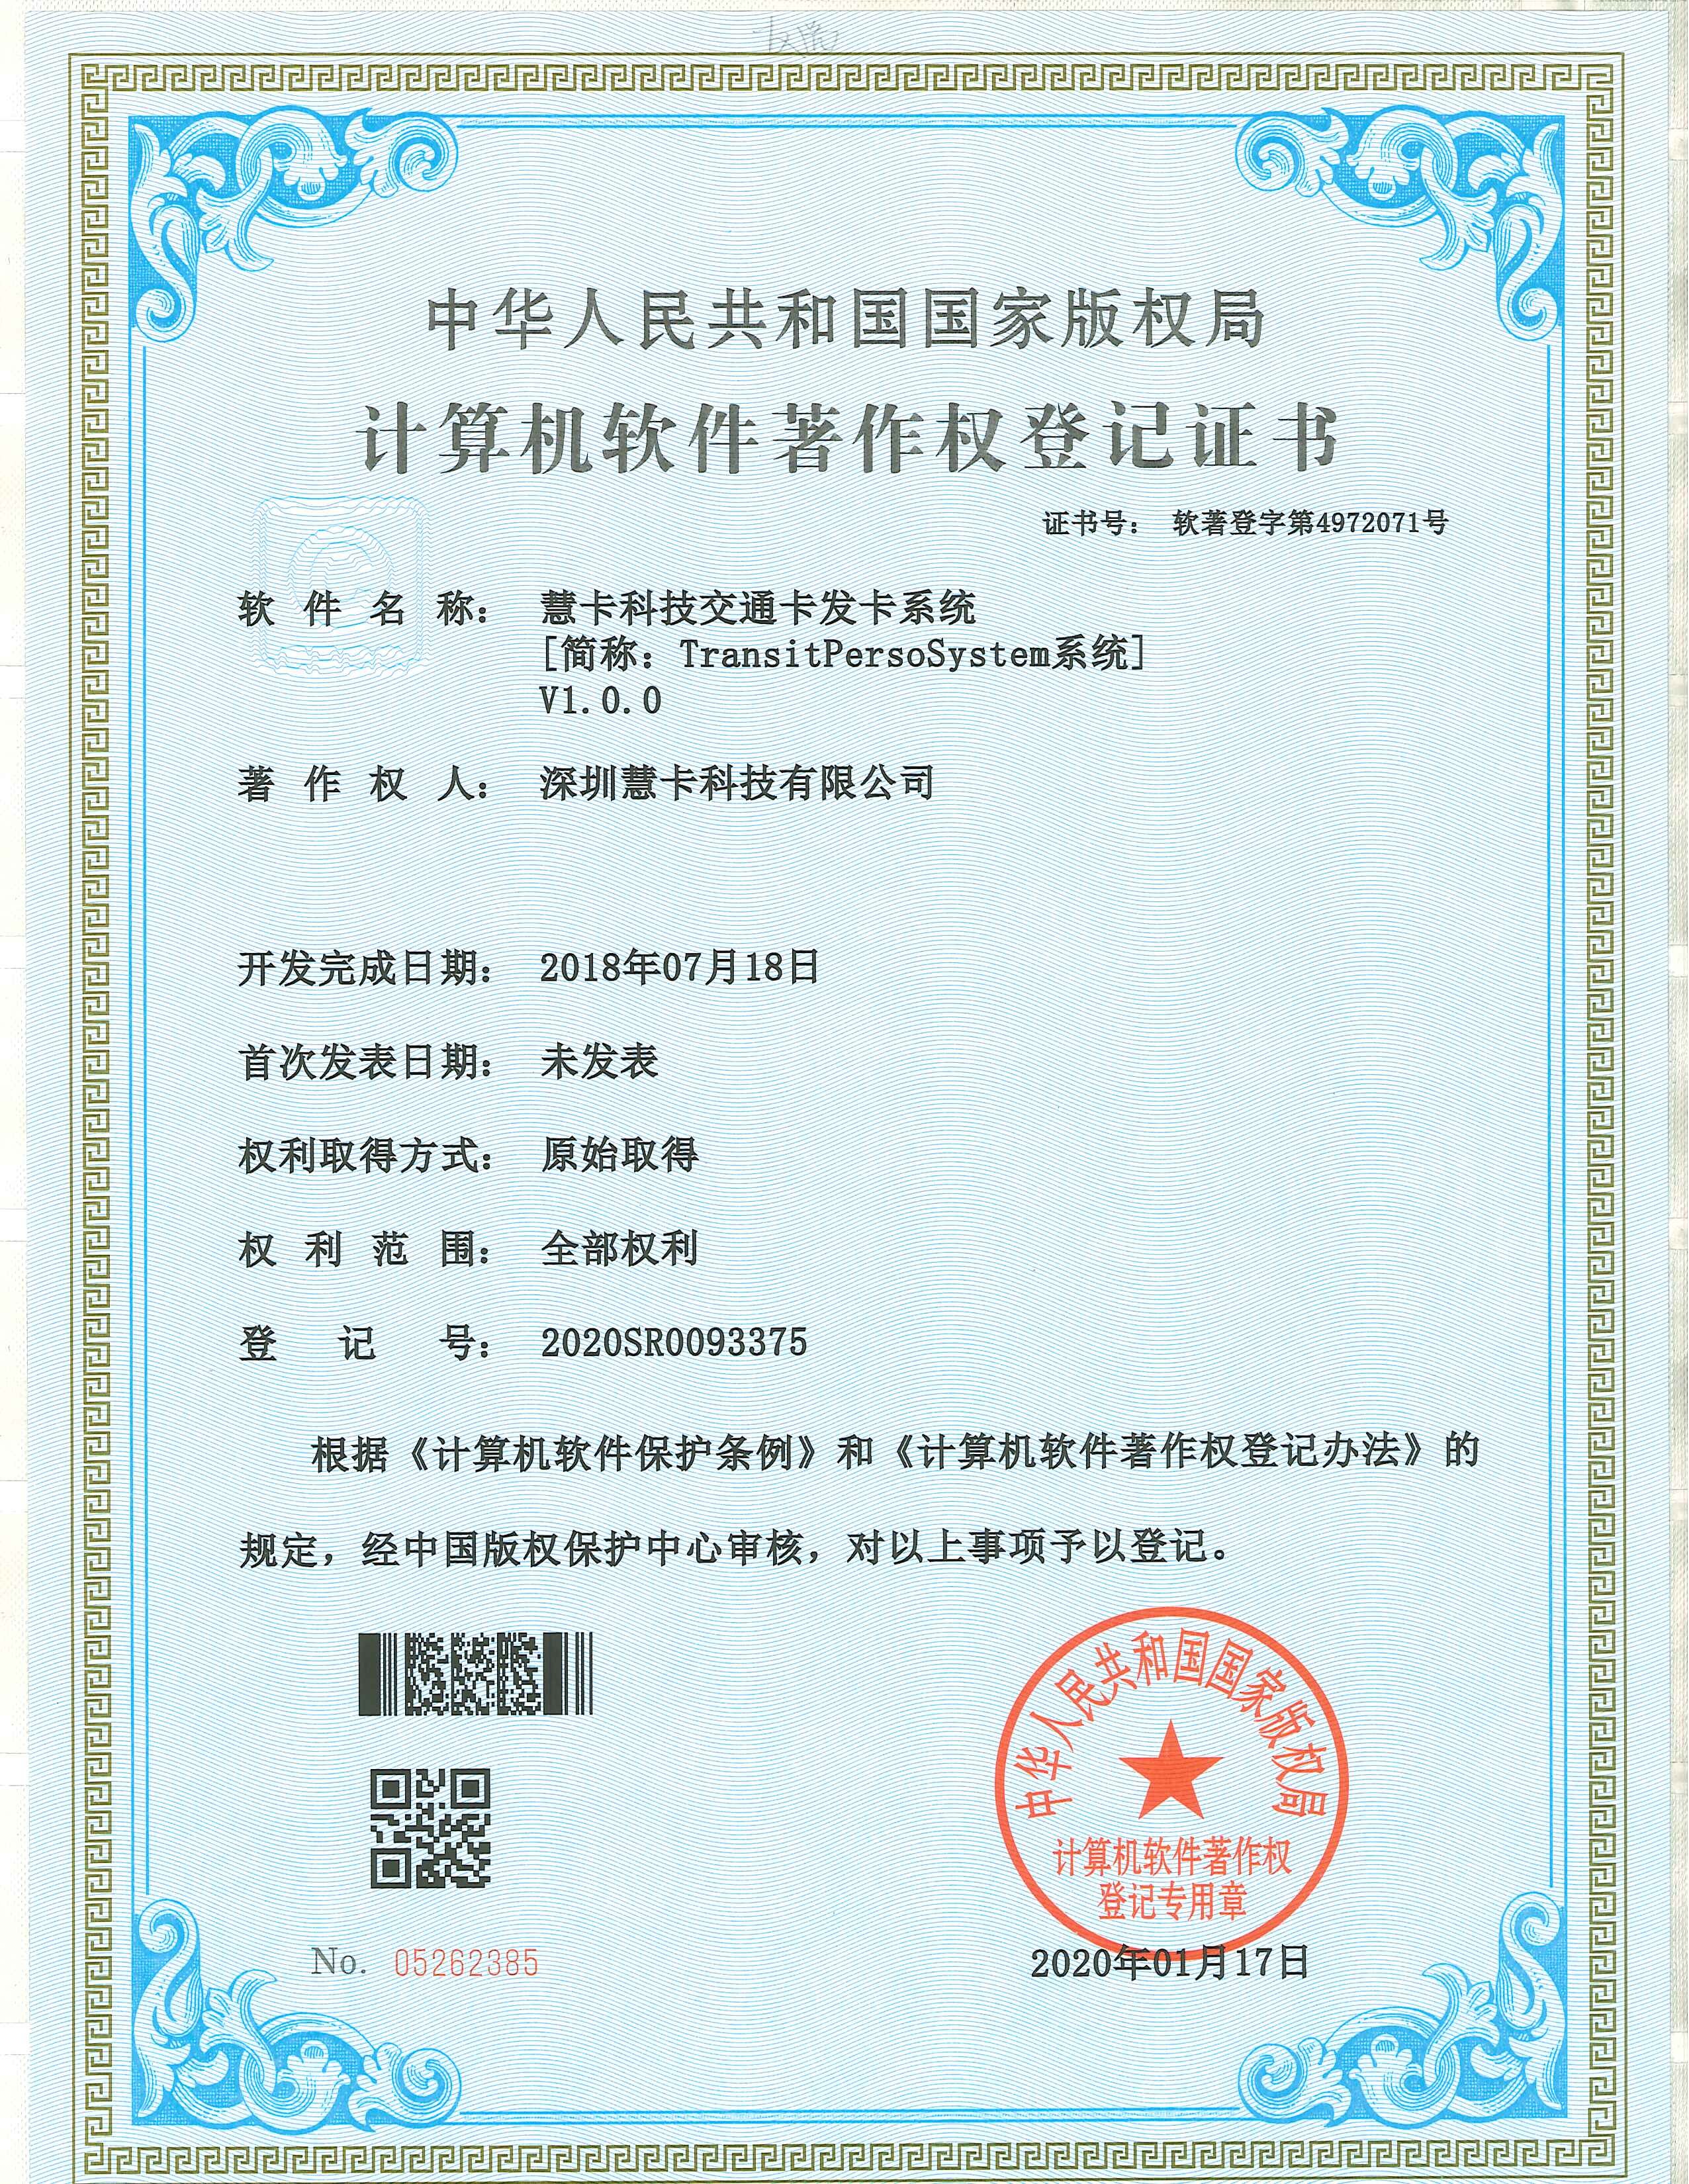 Wisecard Technology Co., Ltd. Certifications